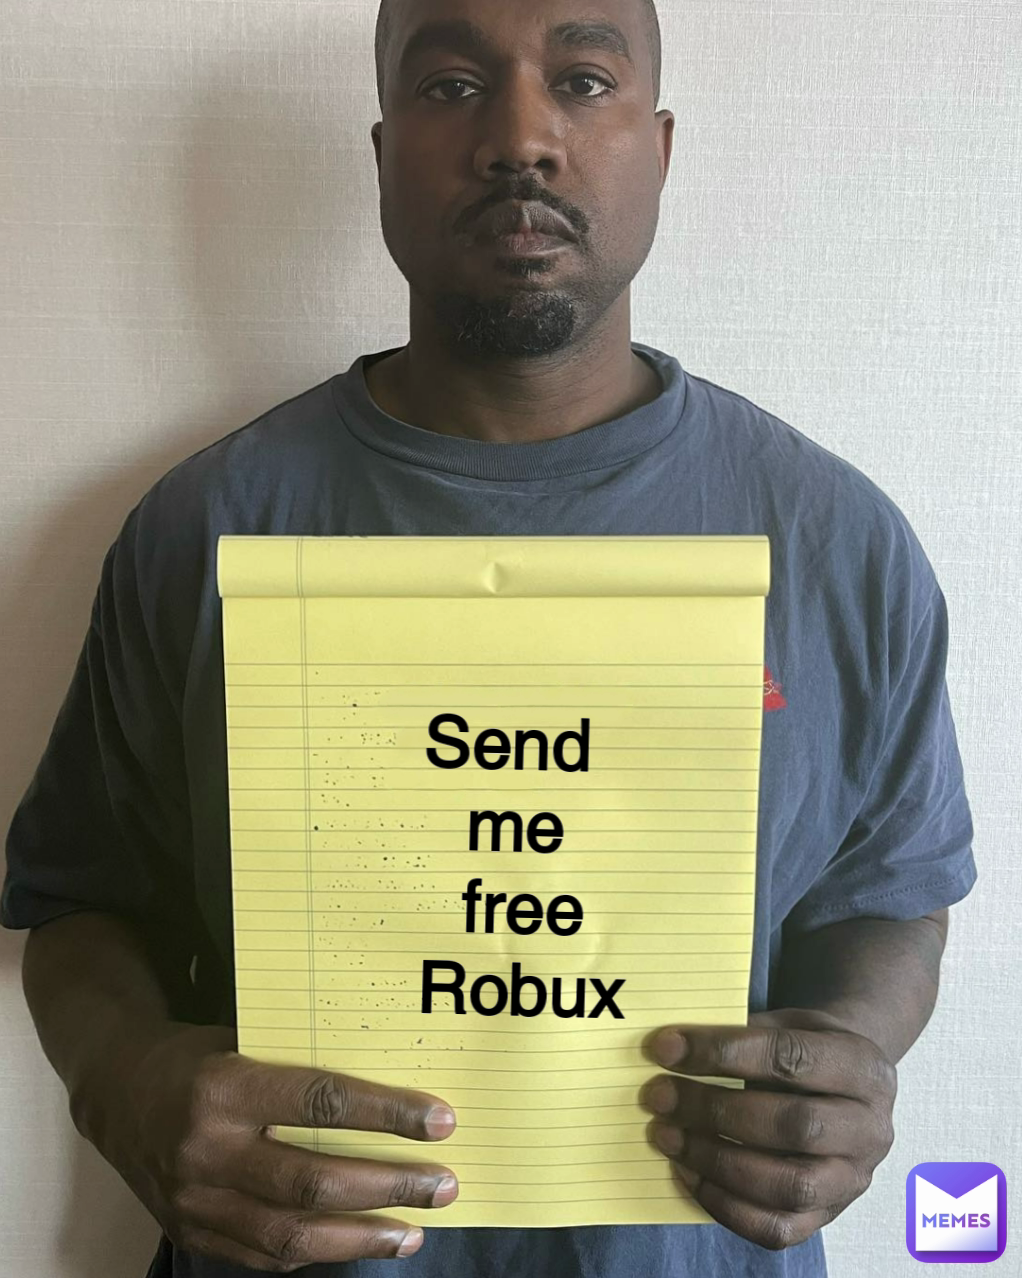 Send 
me
 free
 Robux